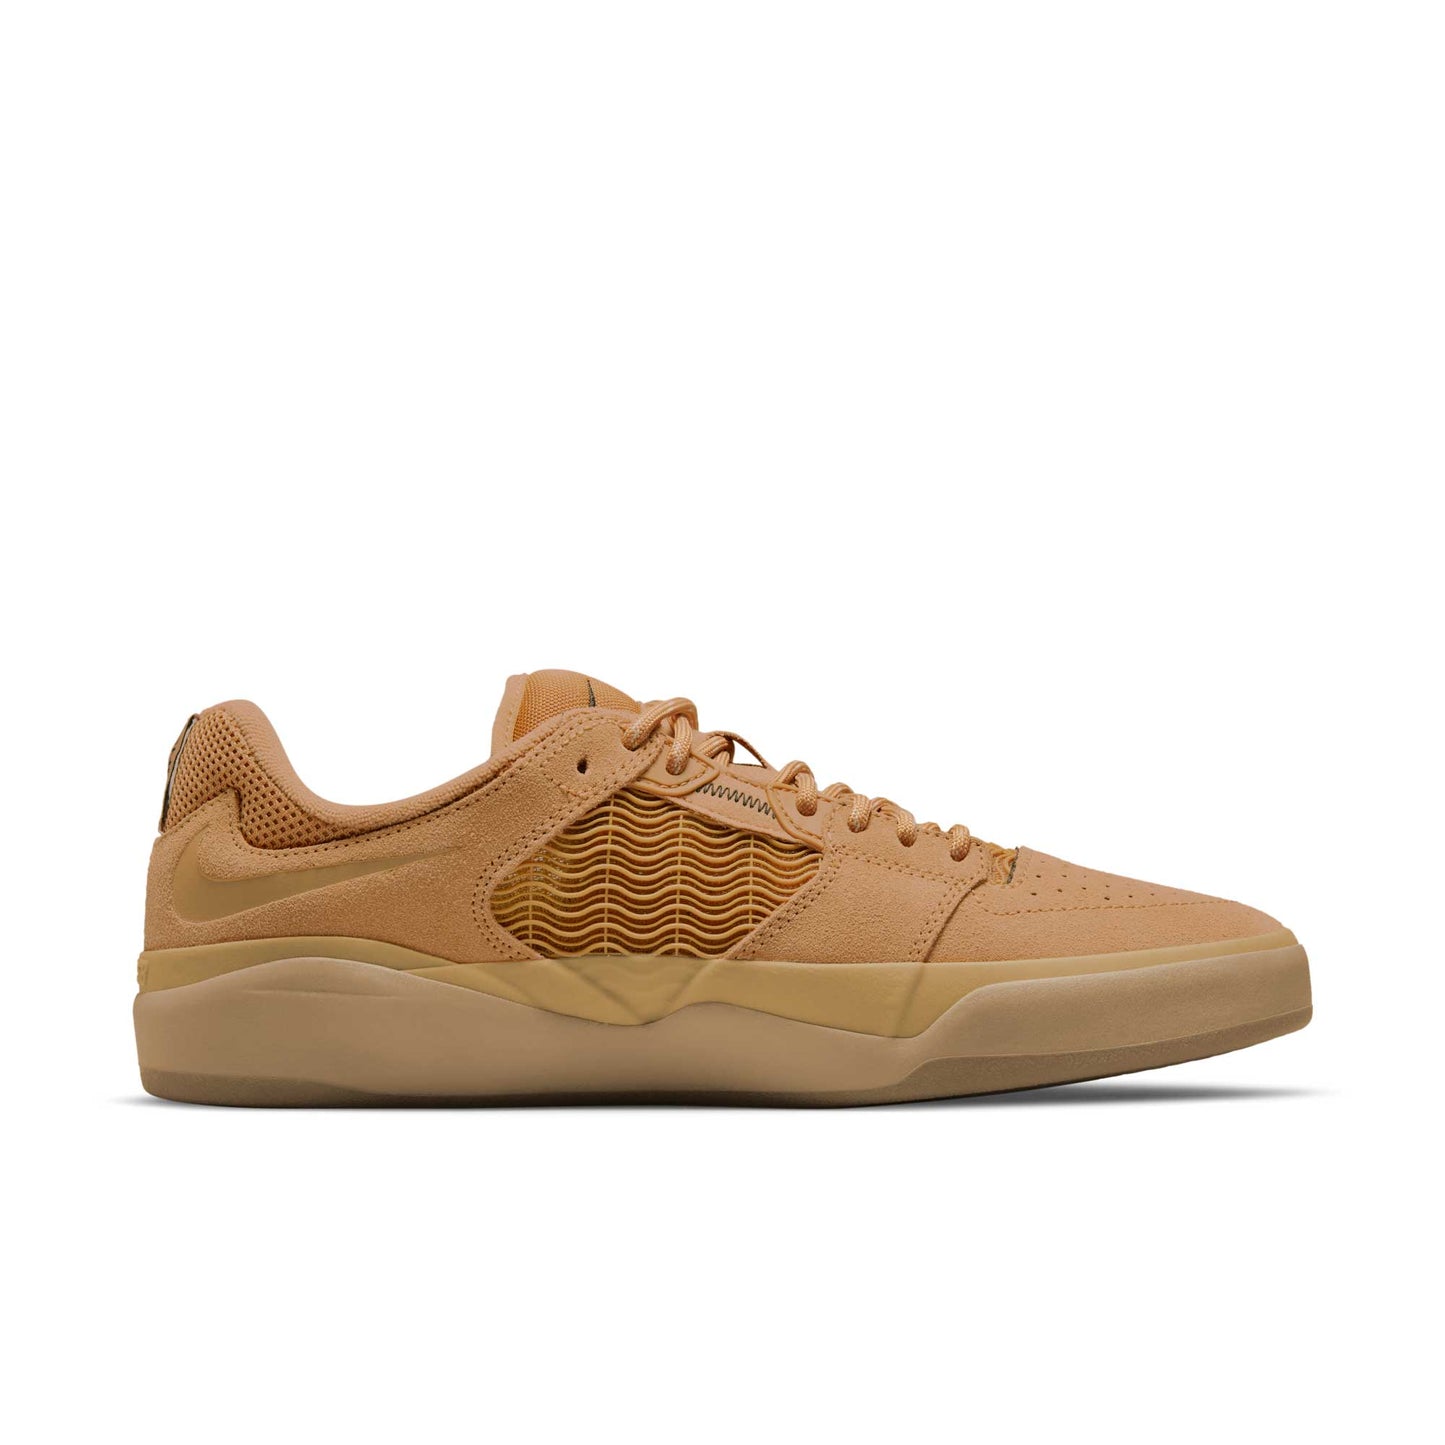 Nike SB Ishod Wair, flax/wheat-flax-gum light brown - Tiki Room Skateboards - 7